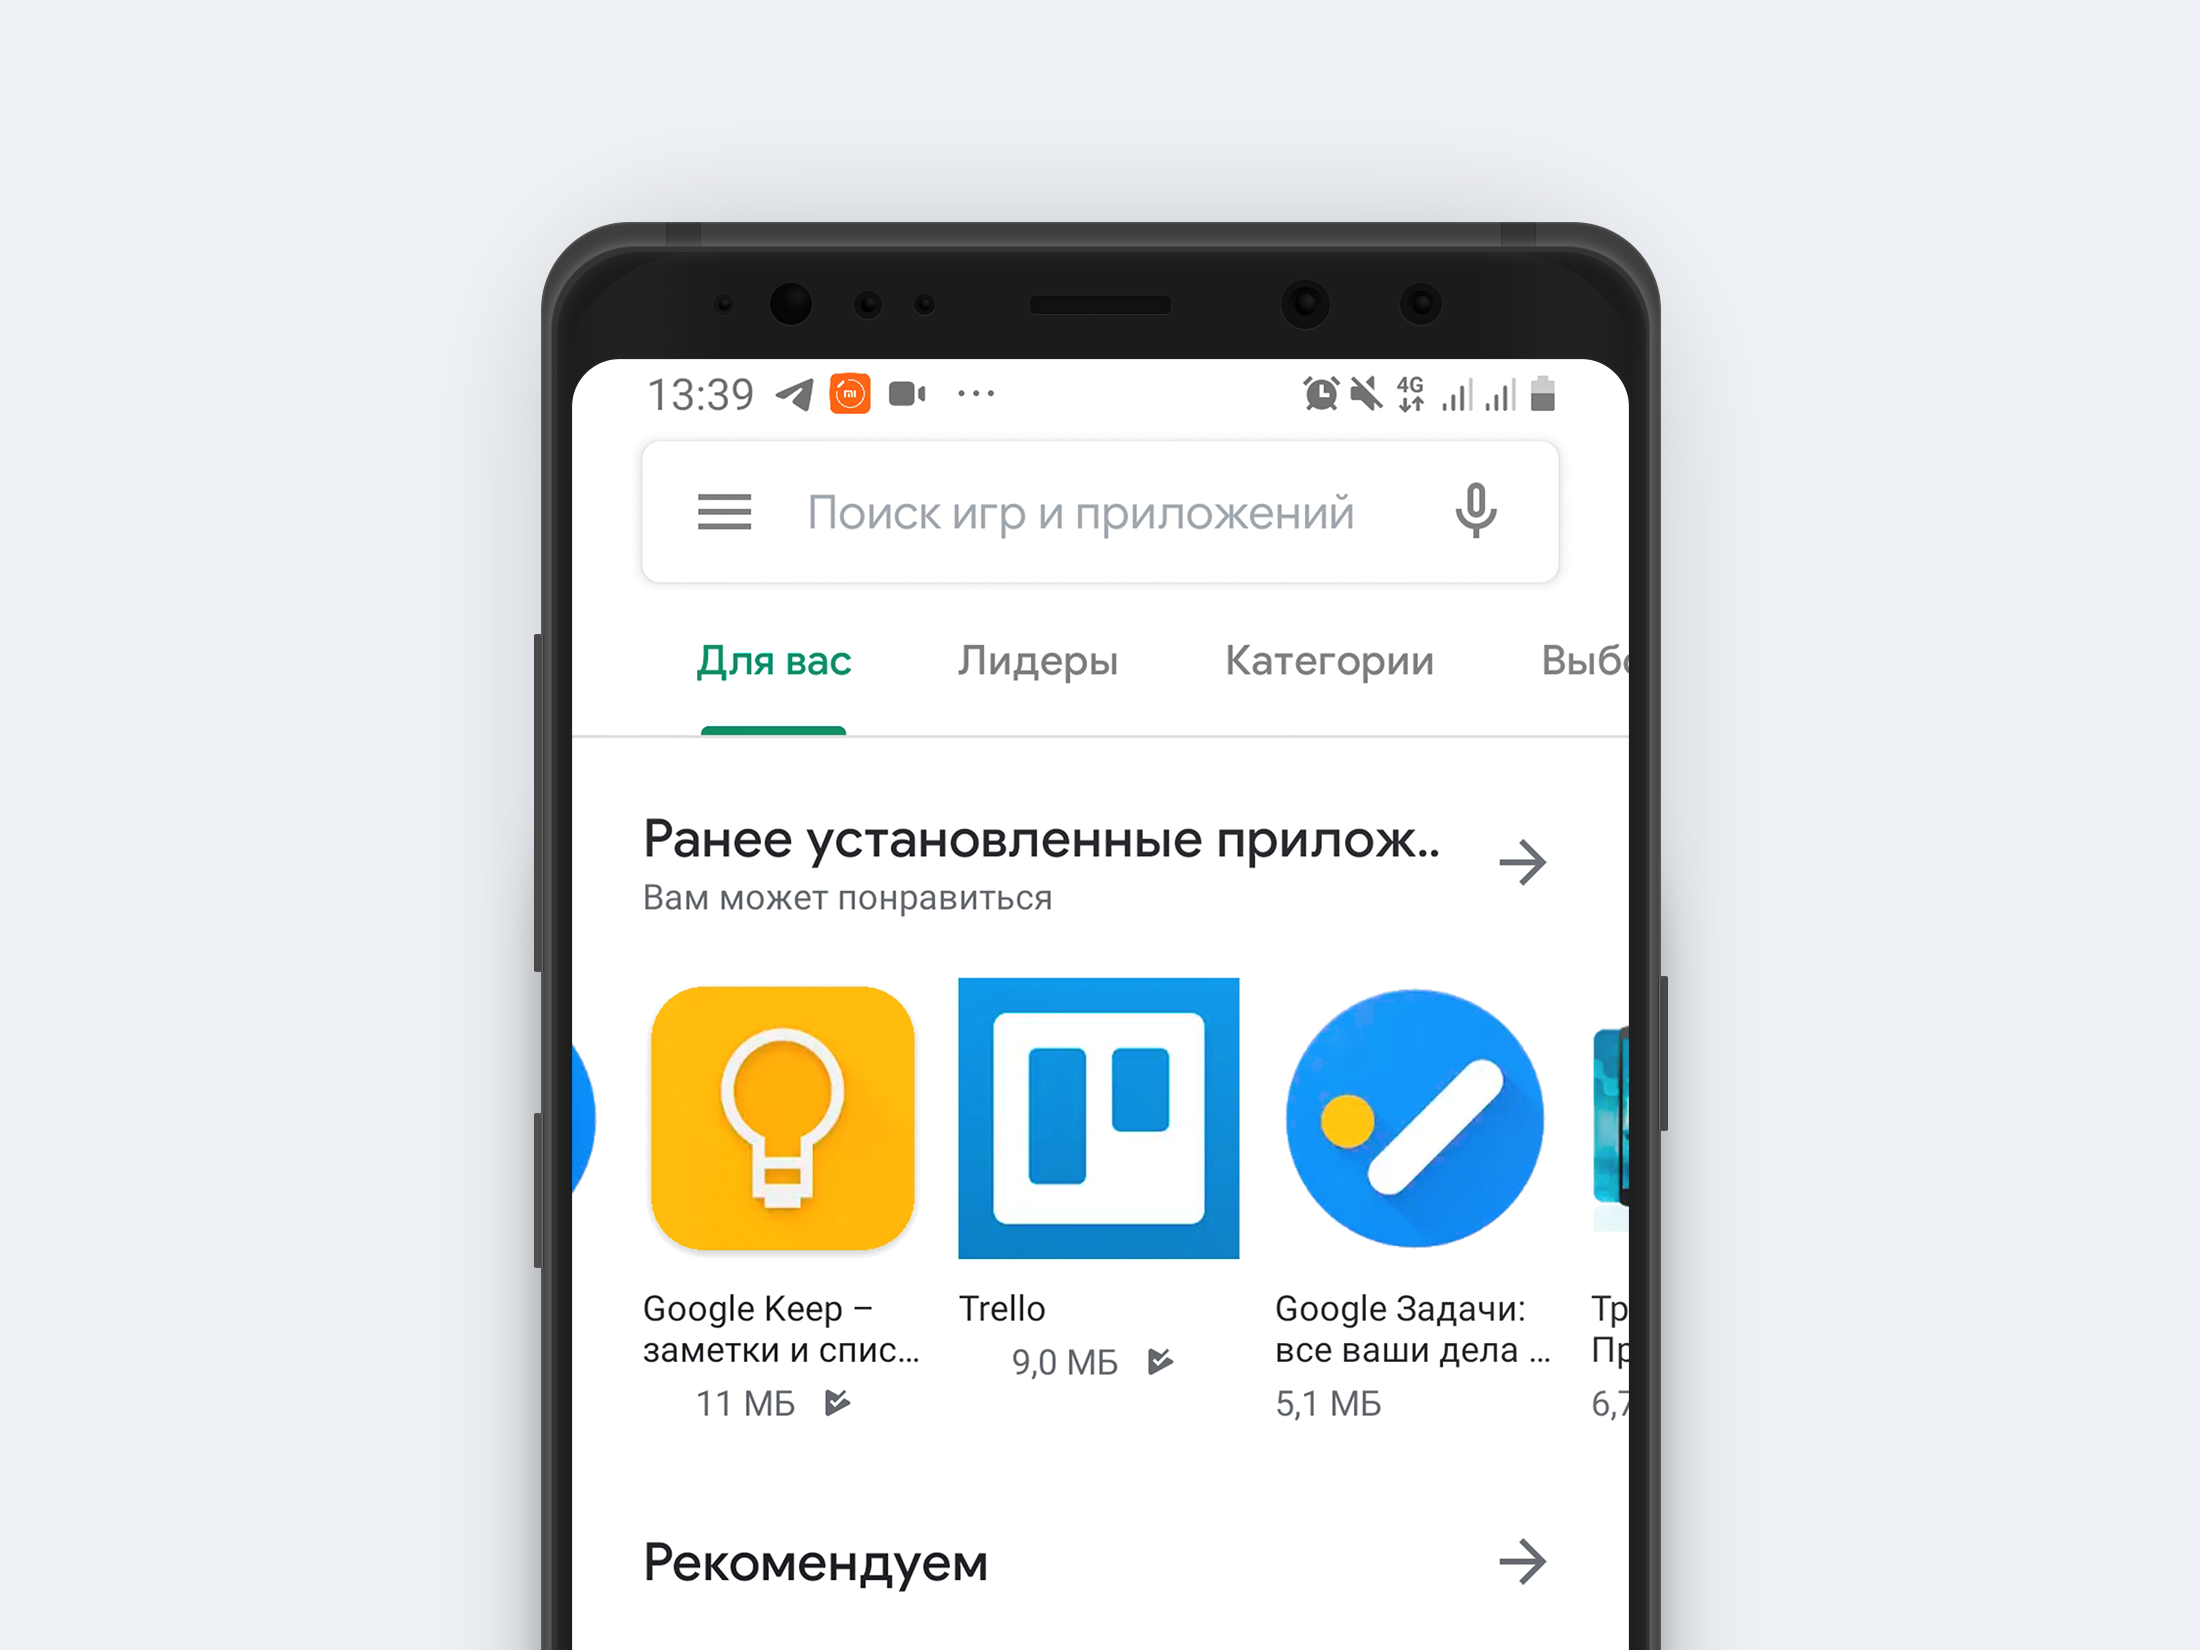 Телеграм трешбокс. Дизайн гугл плея в 2017. Заставка приложения Яндекс.